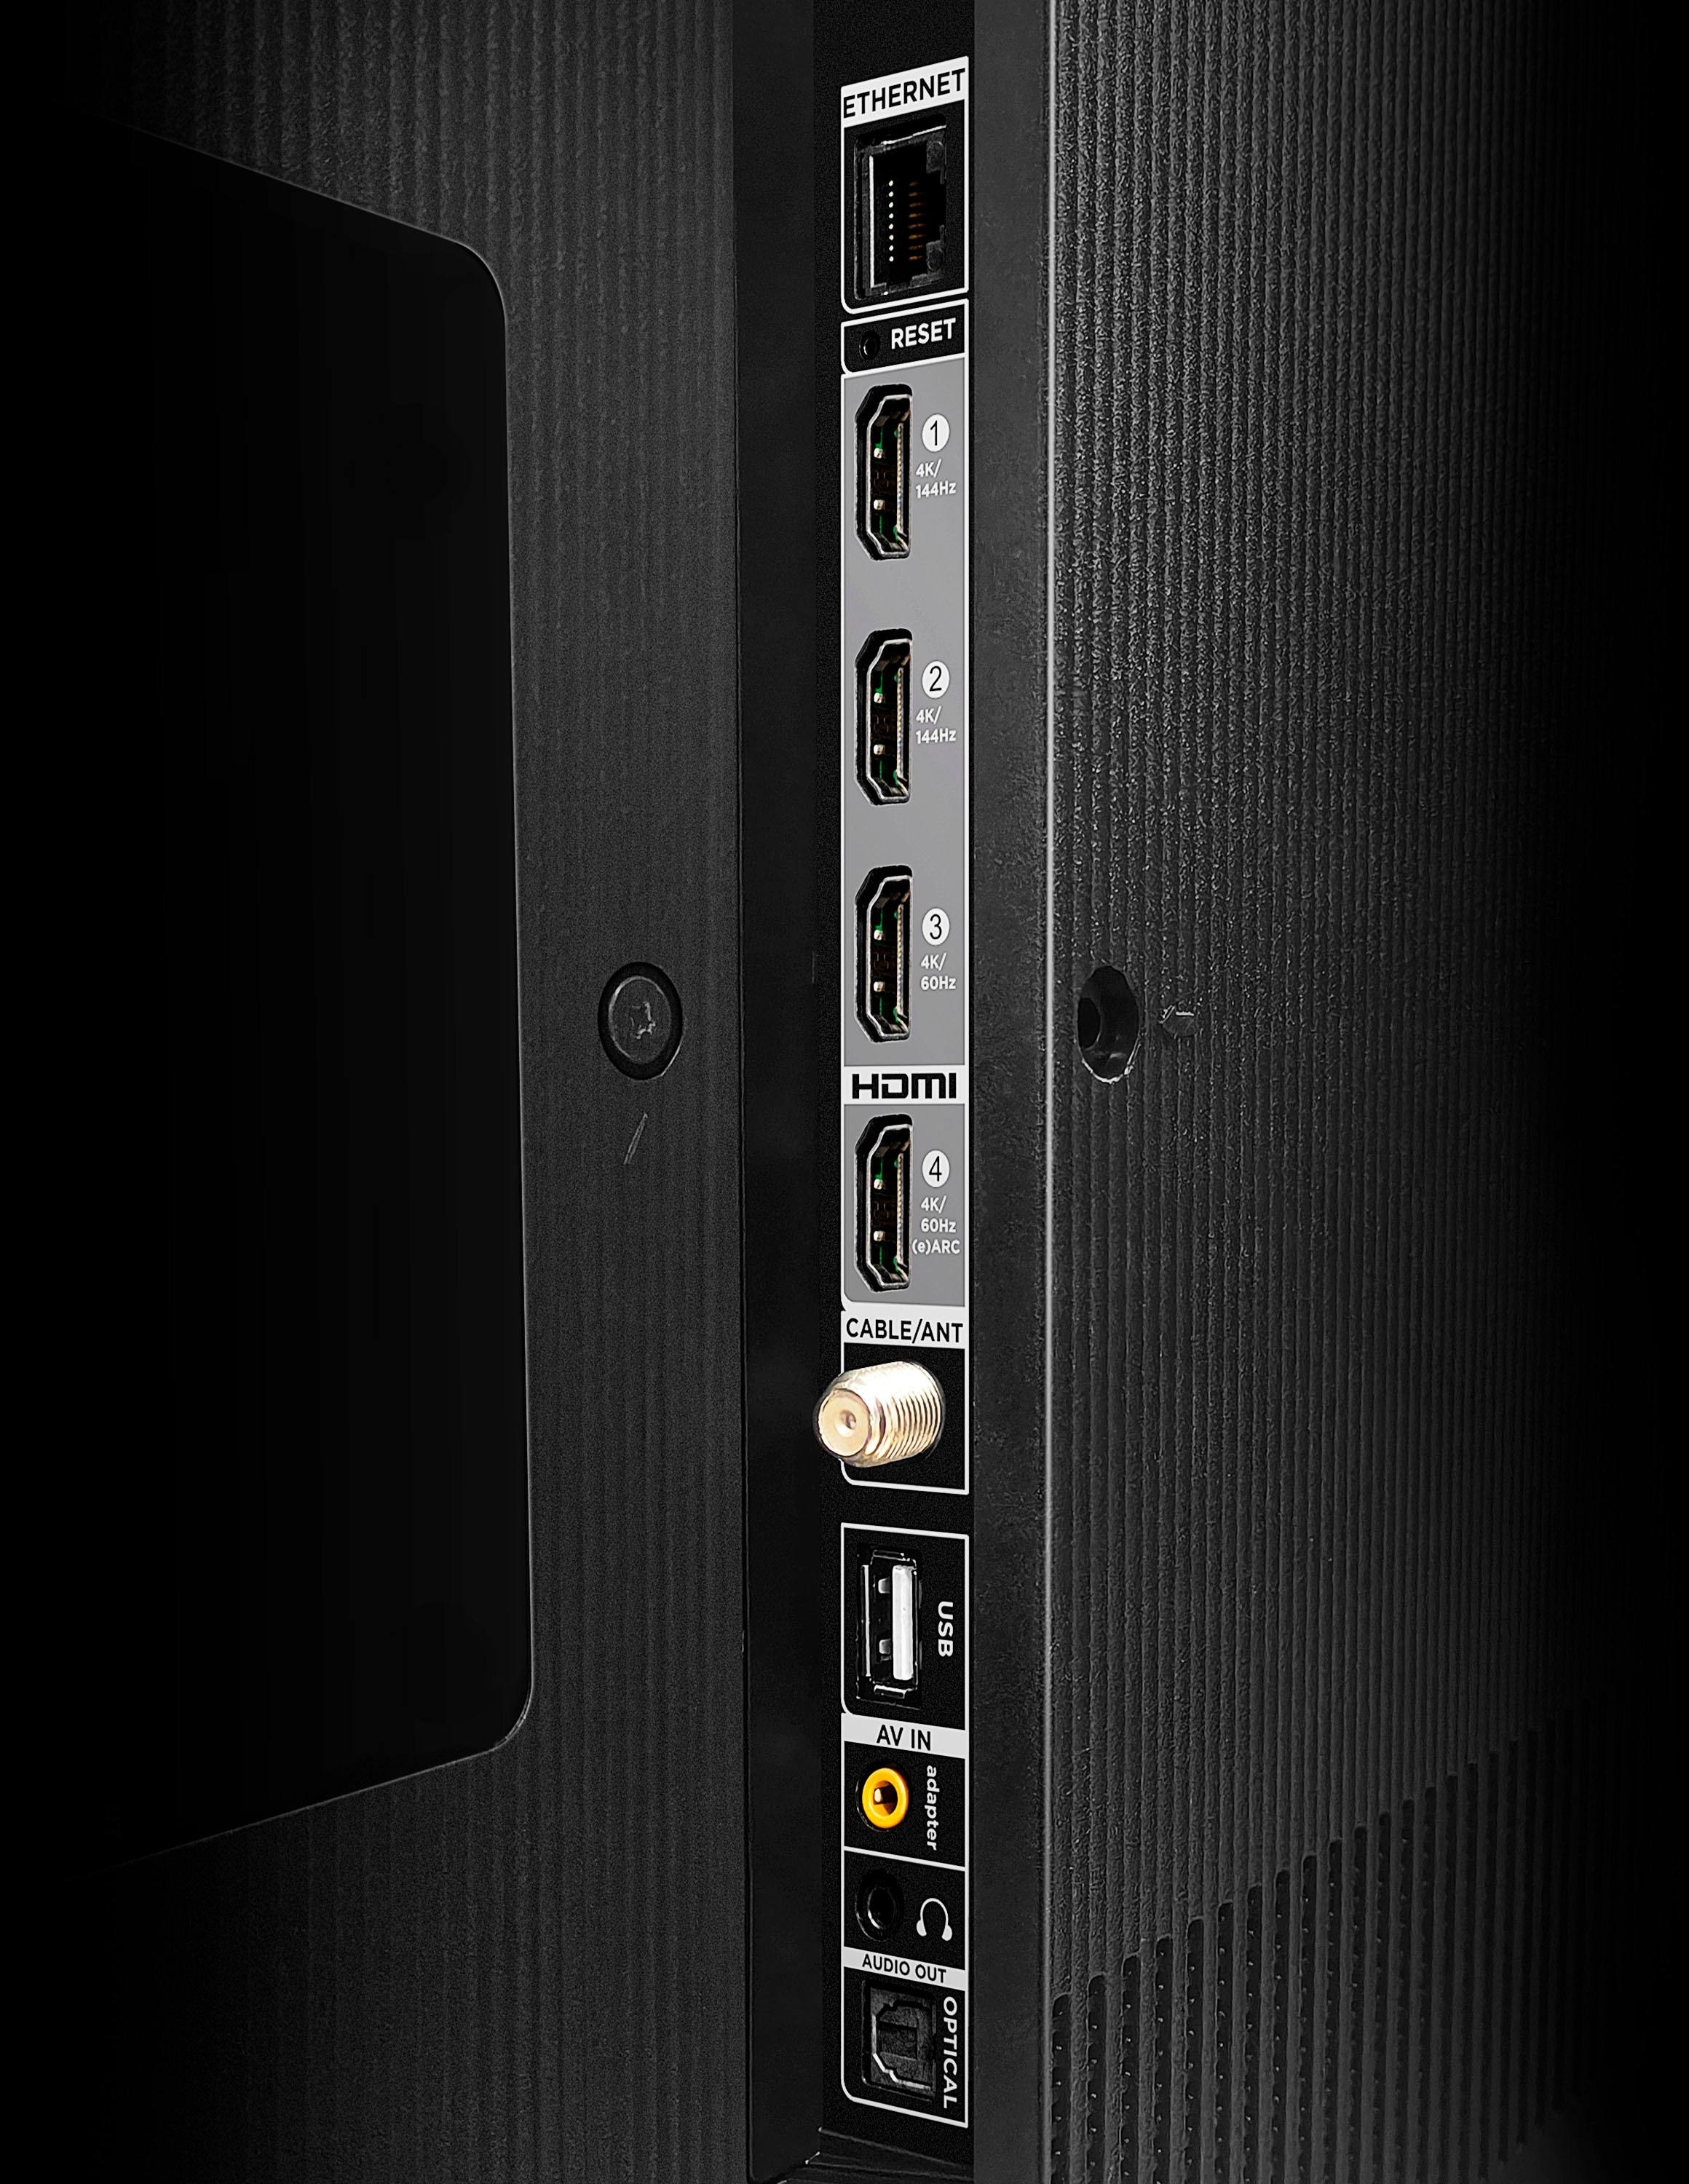 TCL 55-inch 6-Series 4K UHD Dolby Vision HDR QLED Roku Smart TV - 55R635,  2021 Model , Black